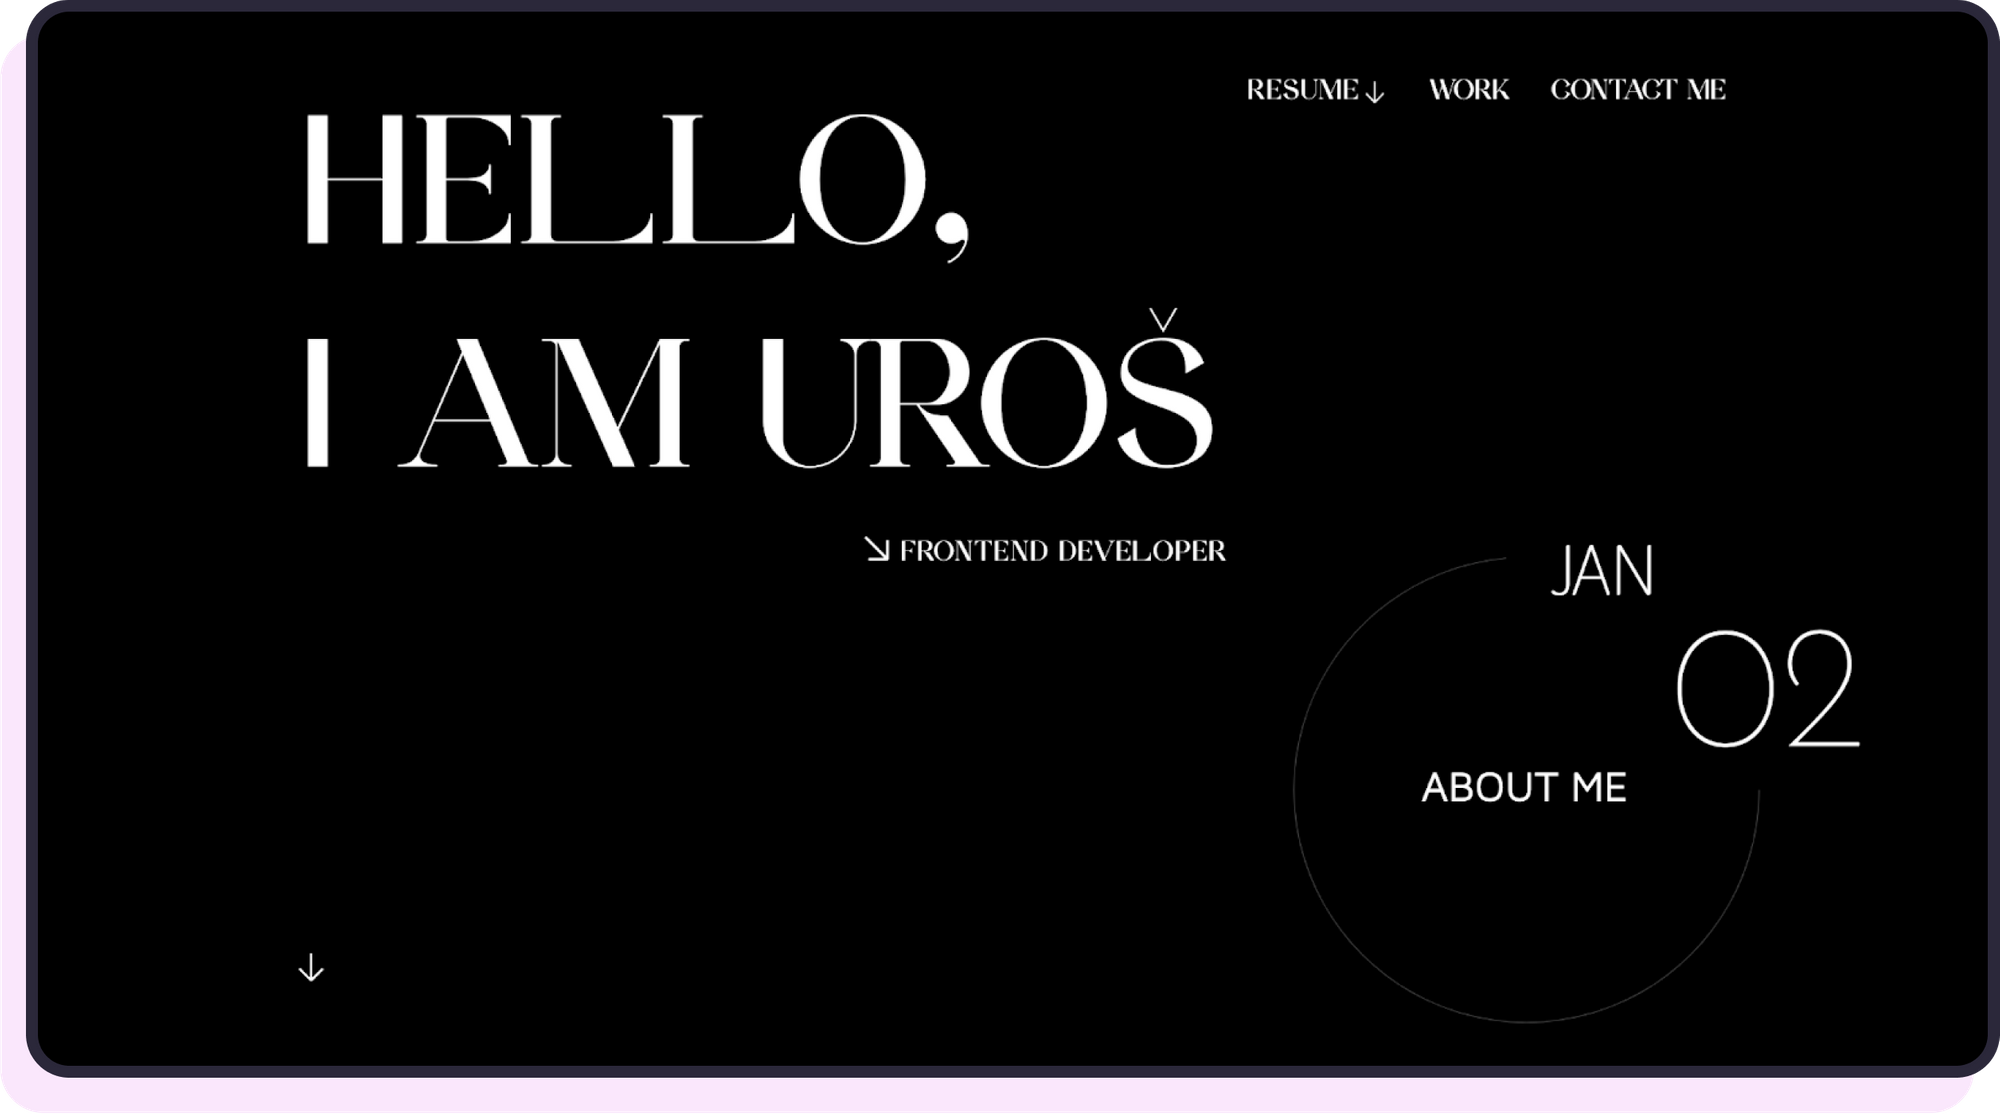 Uroš' portfolio homepage